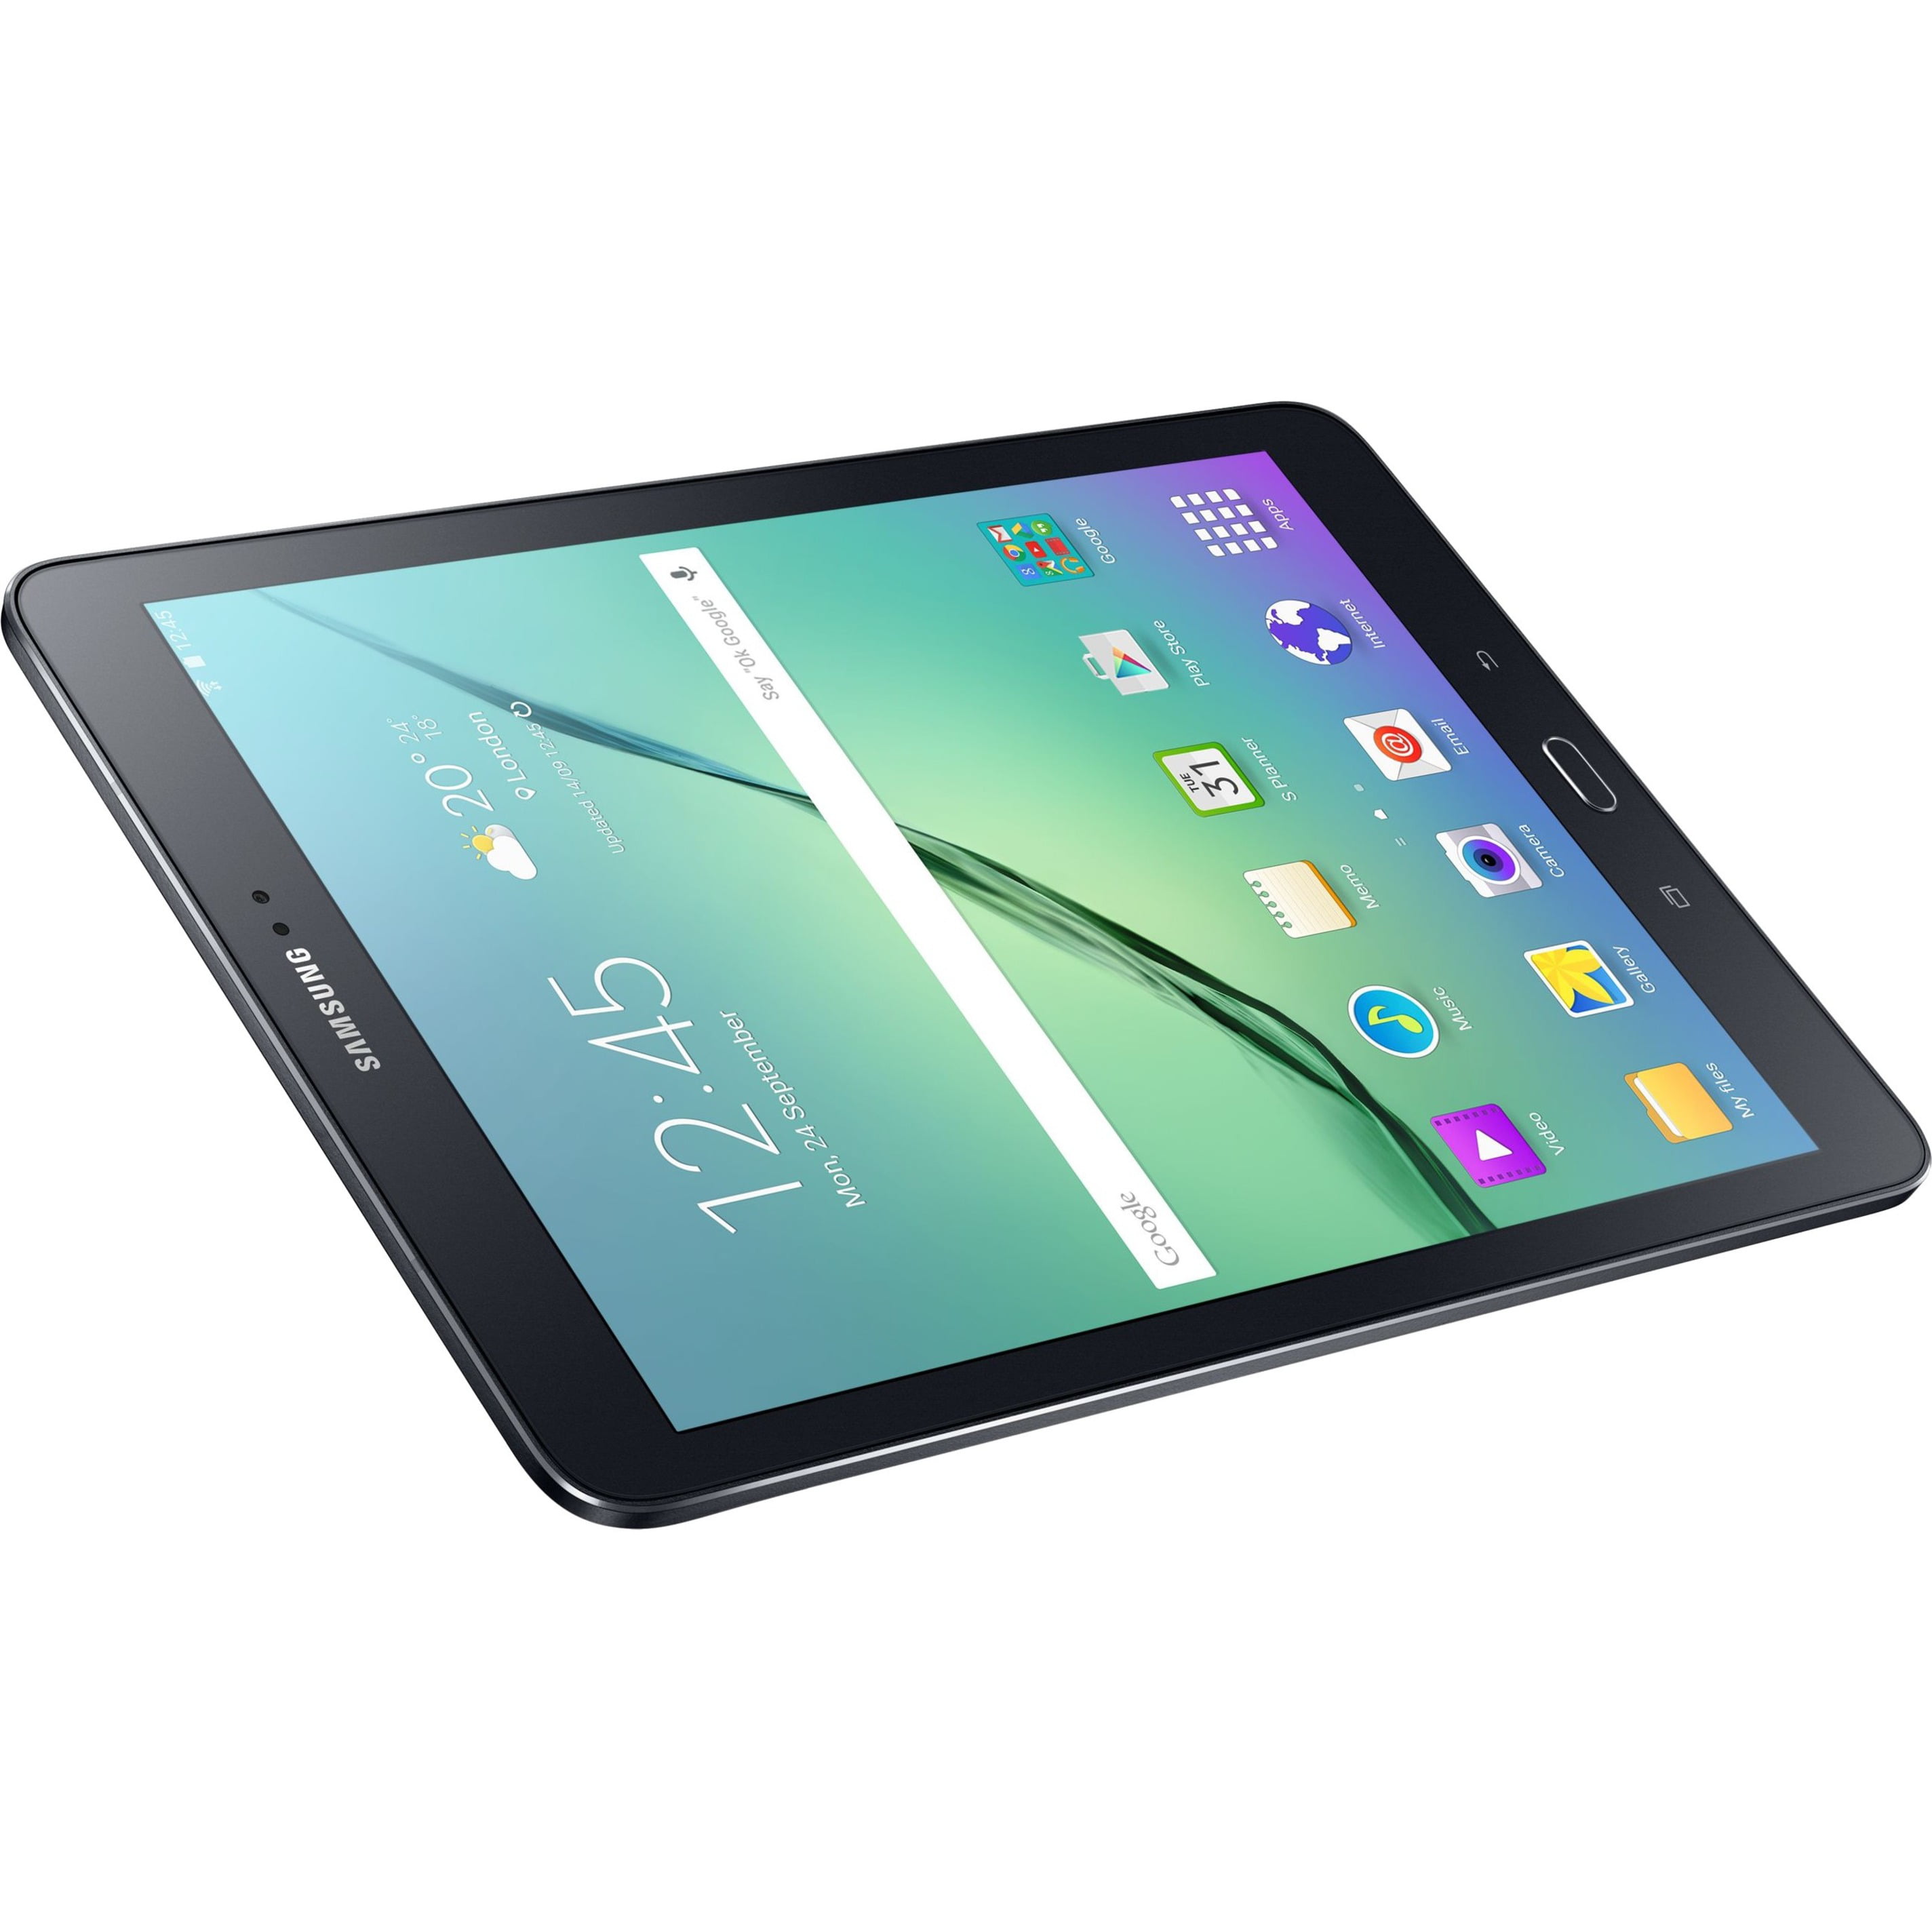 Samsung Galaxy Tab S2 9.7" 32GB Tablet - Android 5.0 - Walmart.com